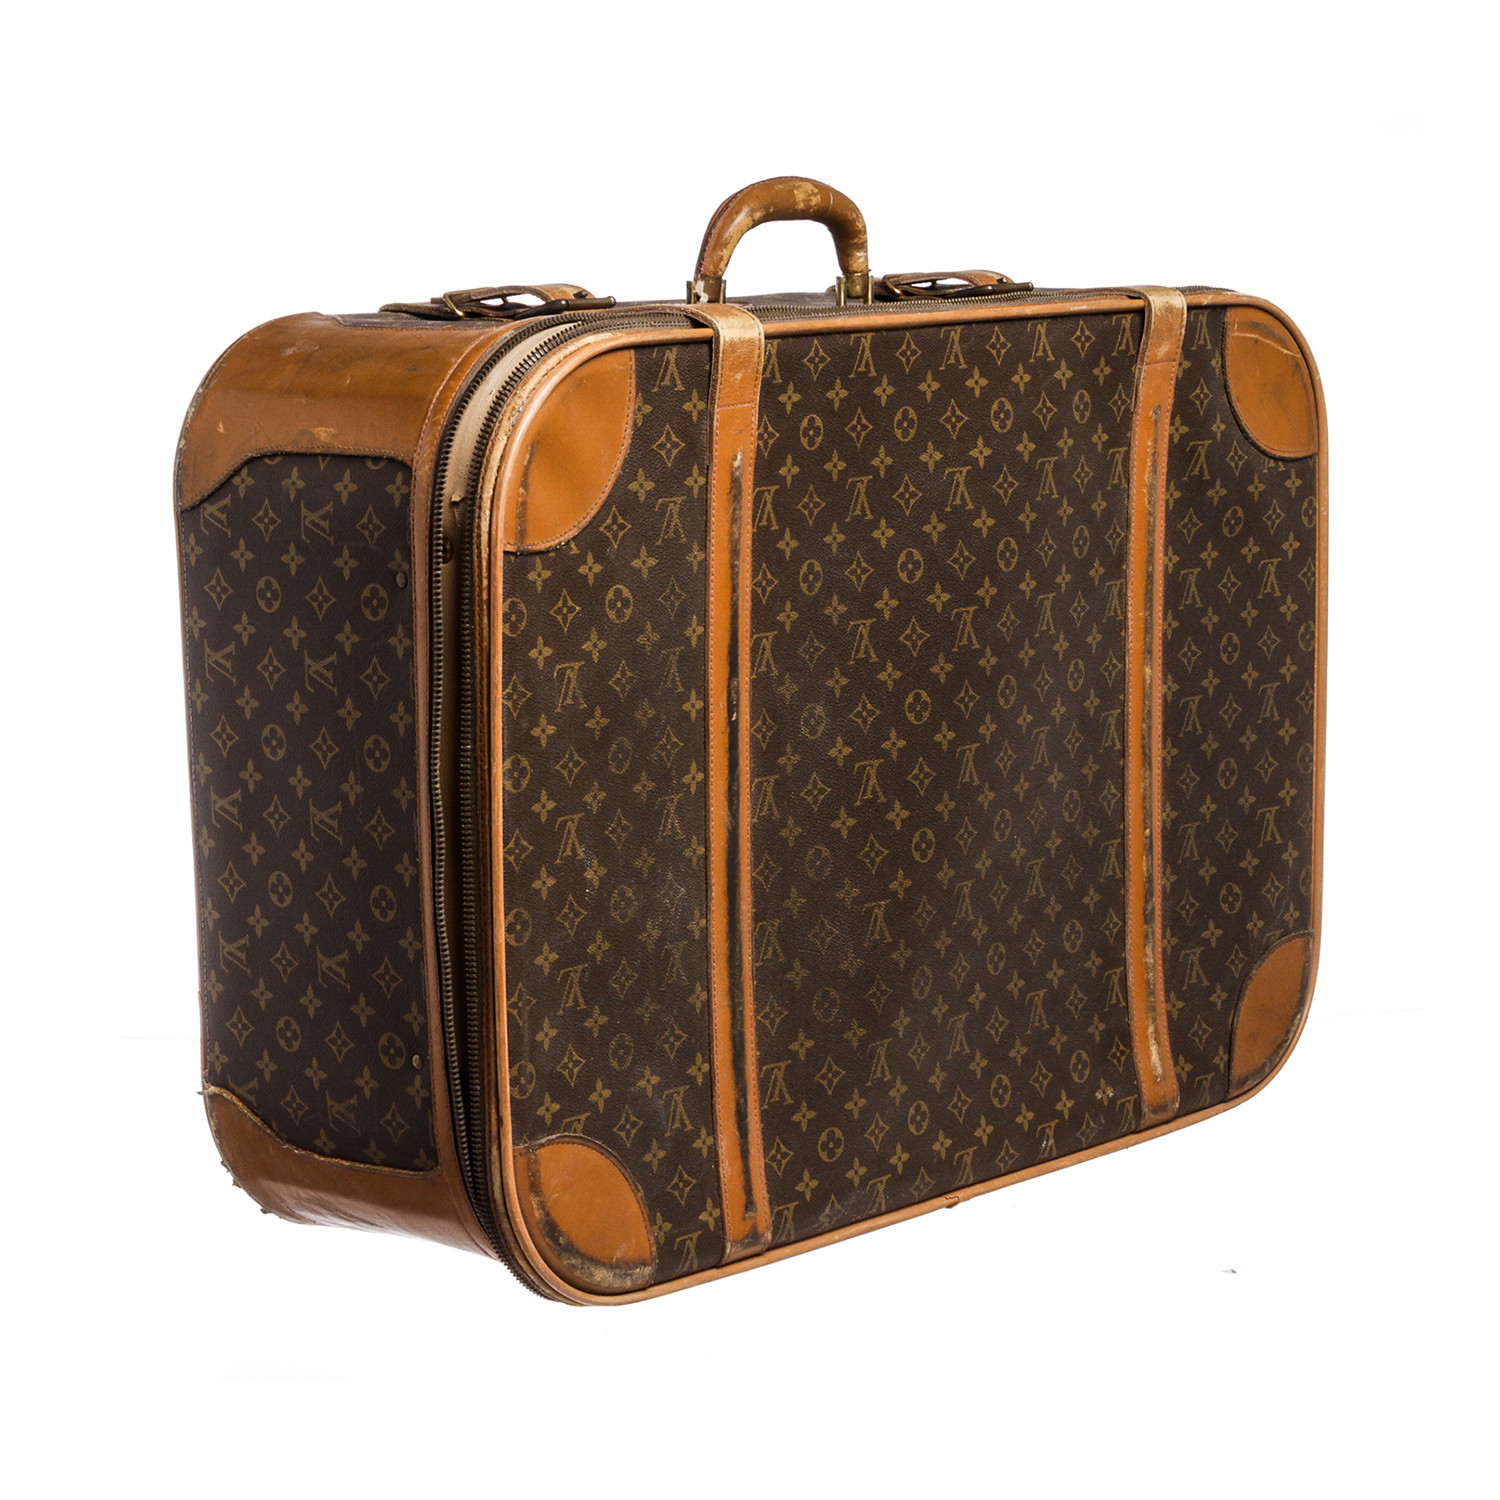  Louis  Vuitton  Vintage Monogram Suitcase Luggage  Pre 